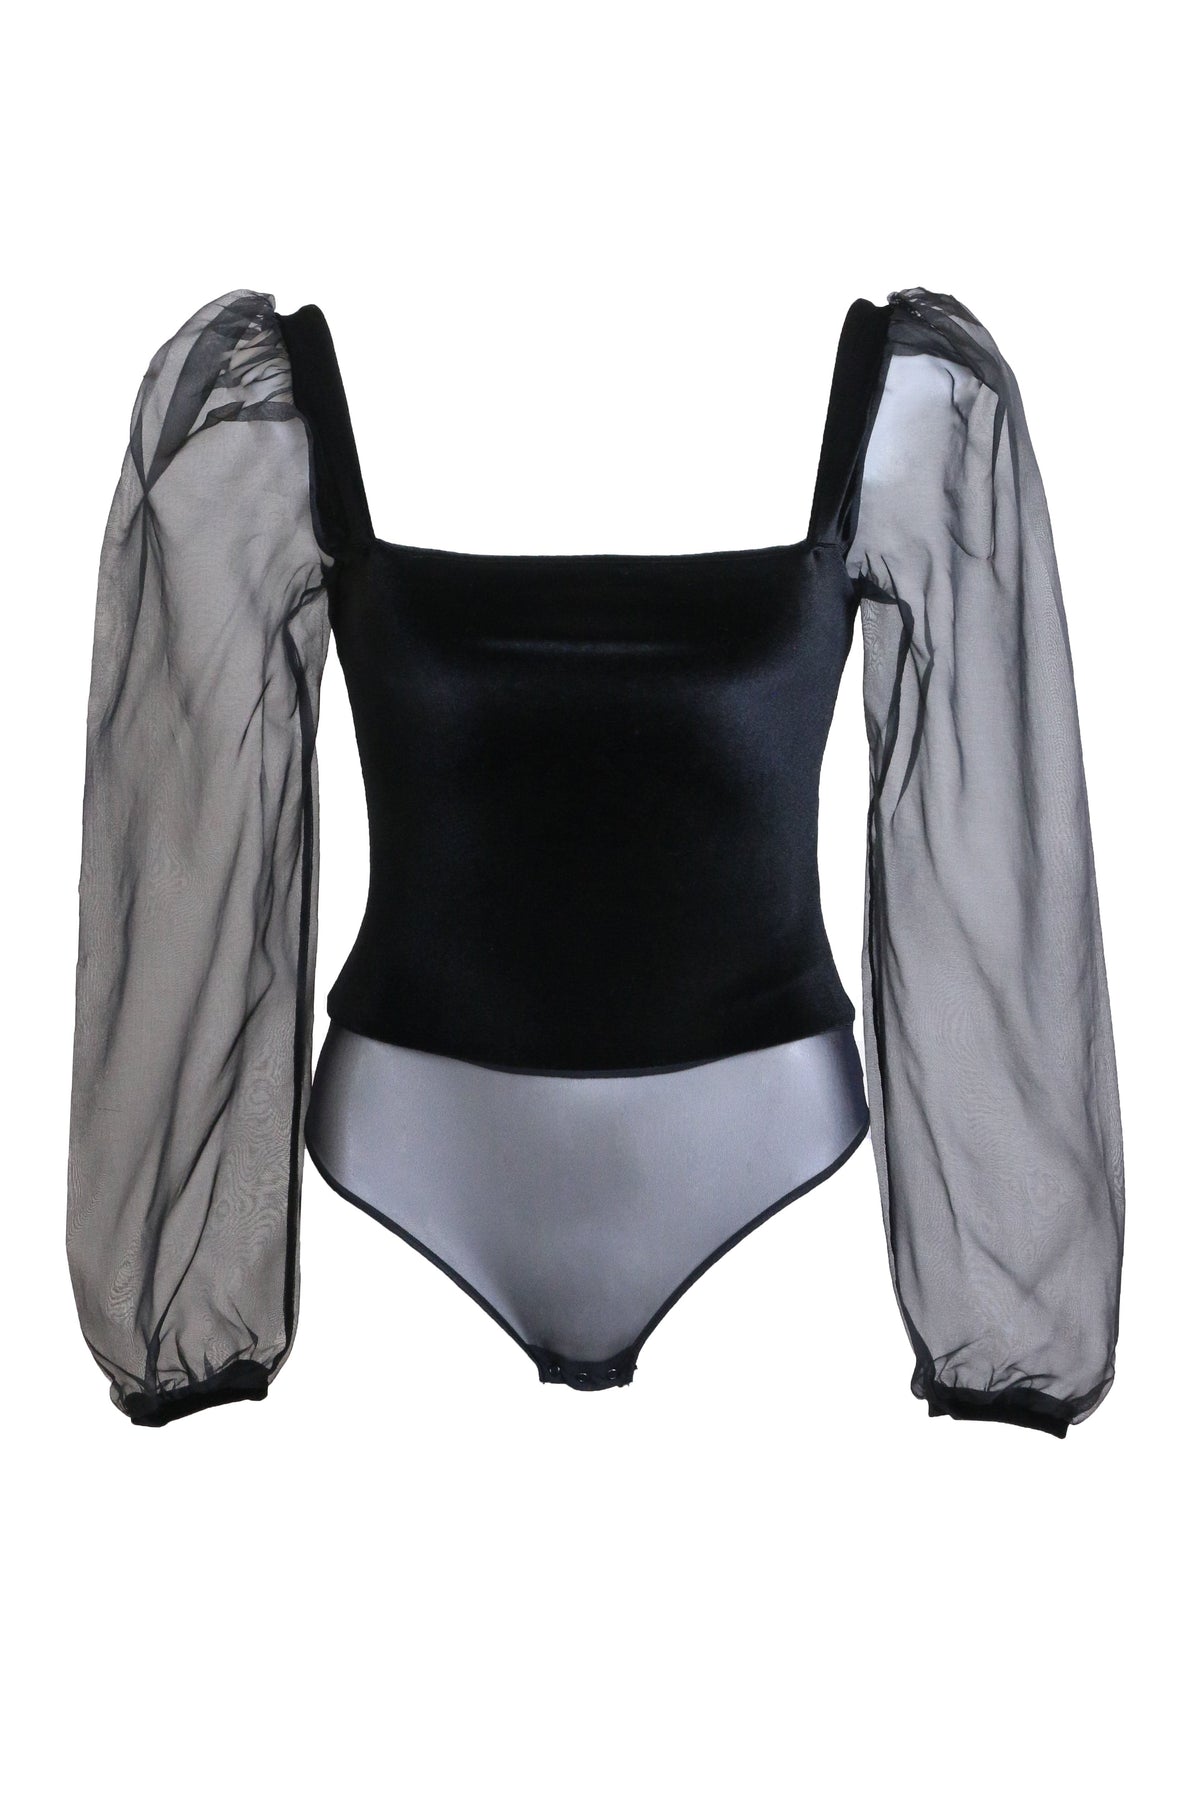 Undress Code Bodysuit Black / XS Hazy Line Bodysuit - Black